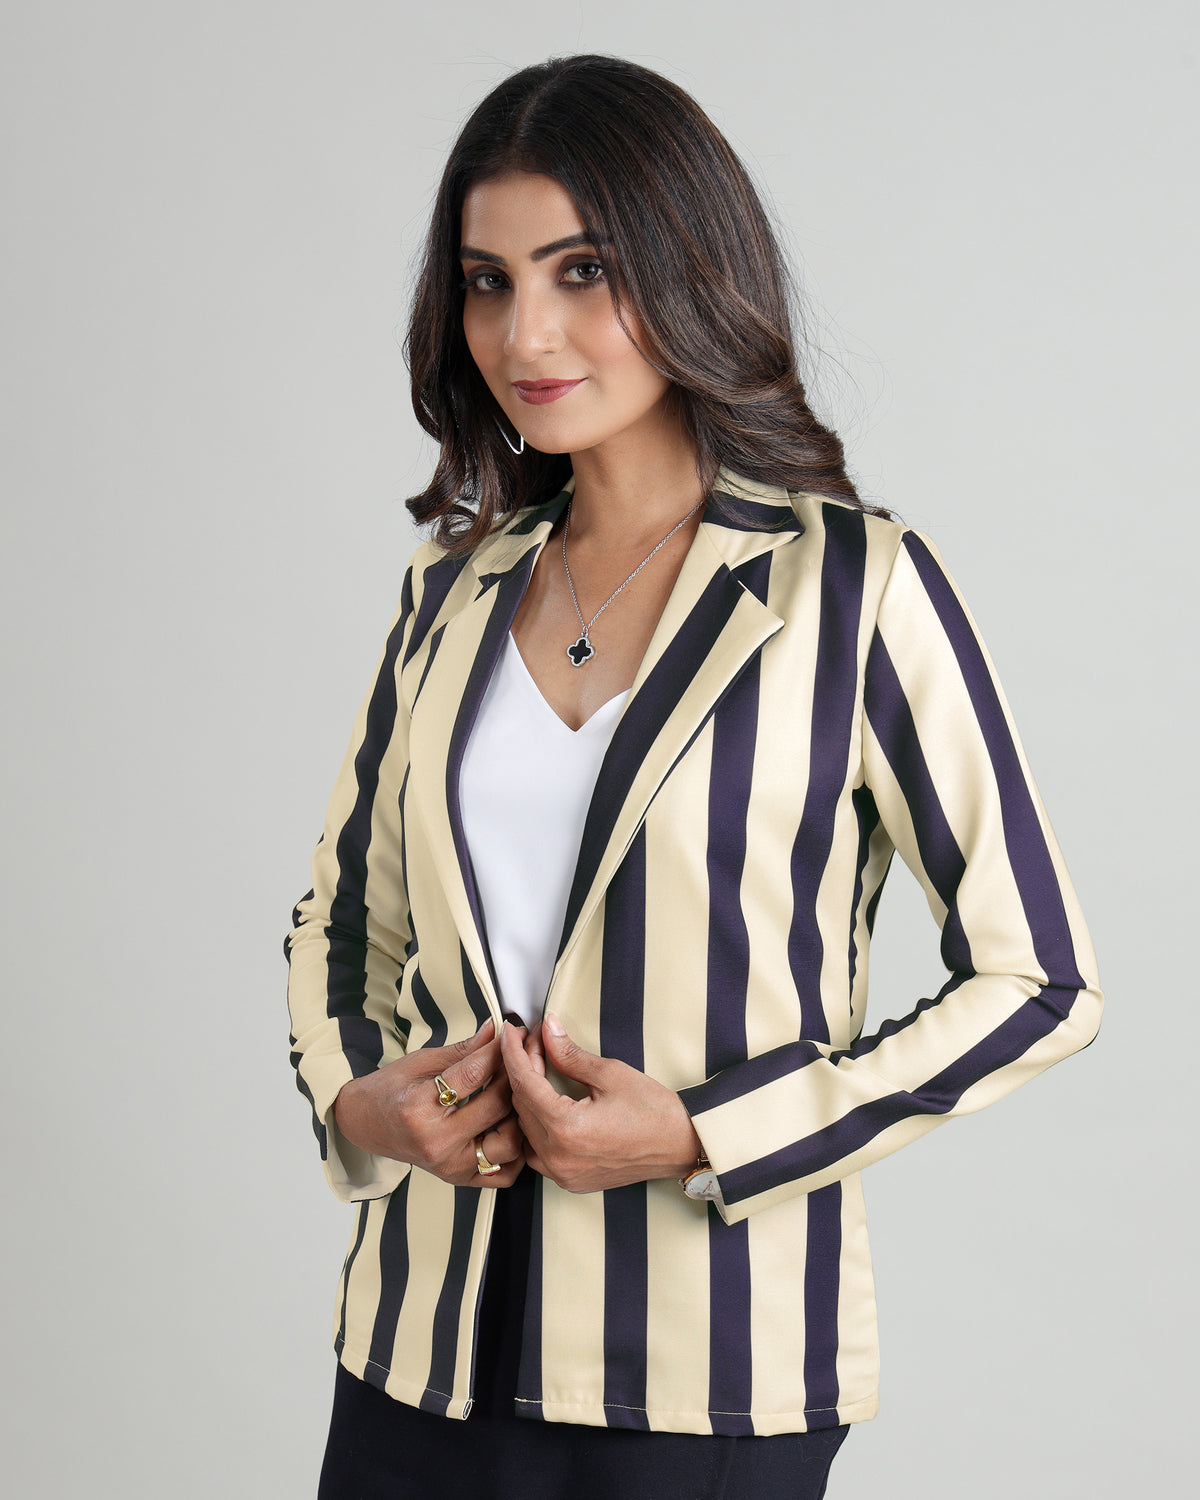 Pinstripe Perfection: Women's Professional Striped Jacket